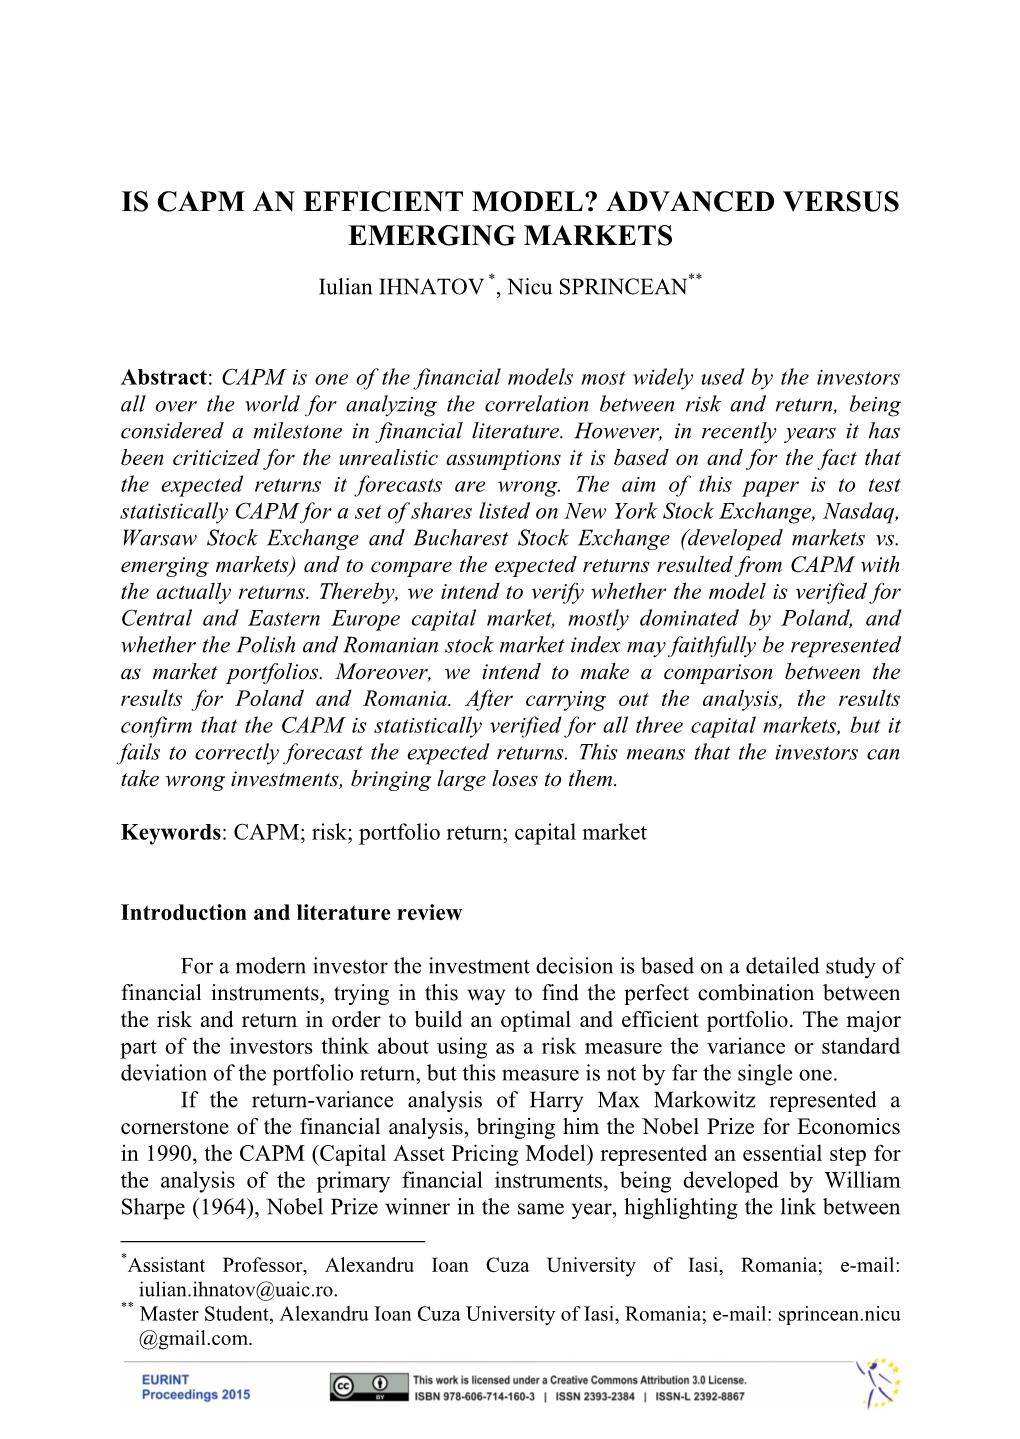 Is Capm an Efficient Model? Advanced Versus Emerging Markets